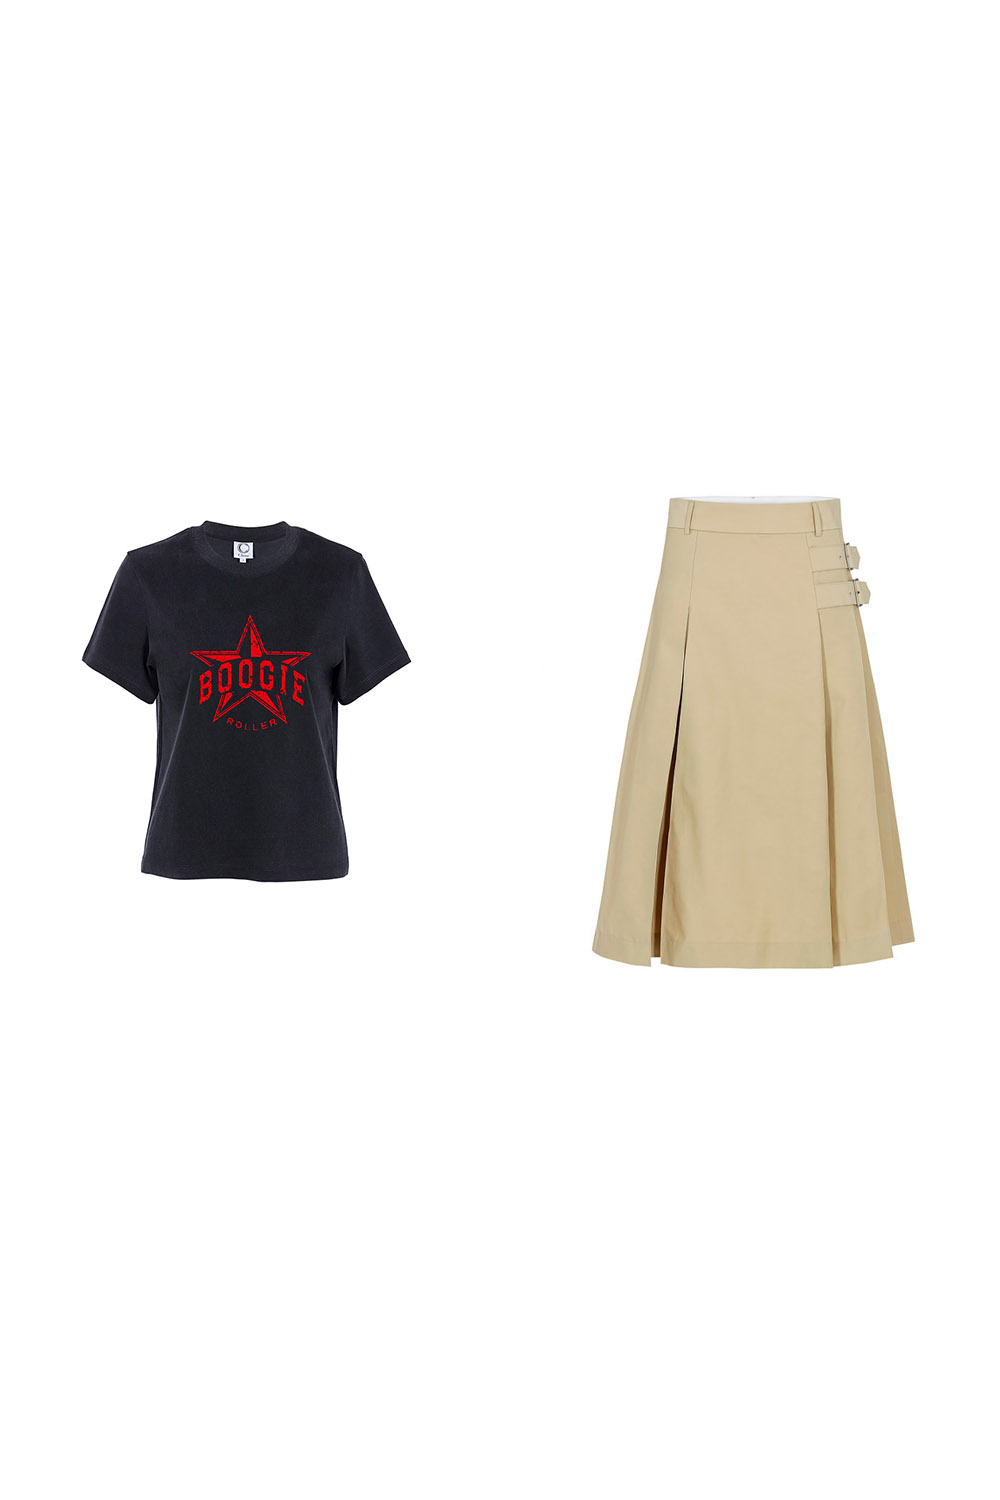 Boogie T-shirts_black+Sounds Paris Skirt_beige